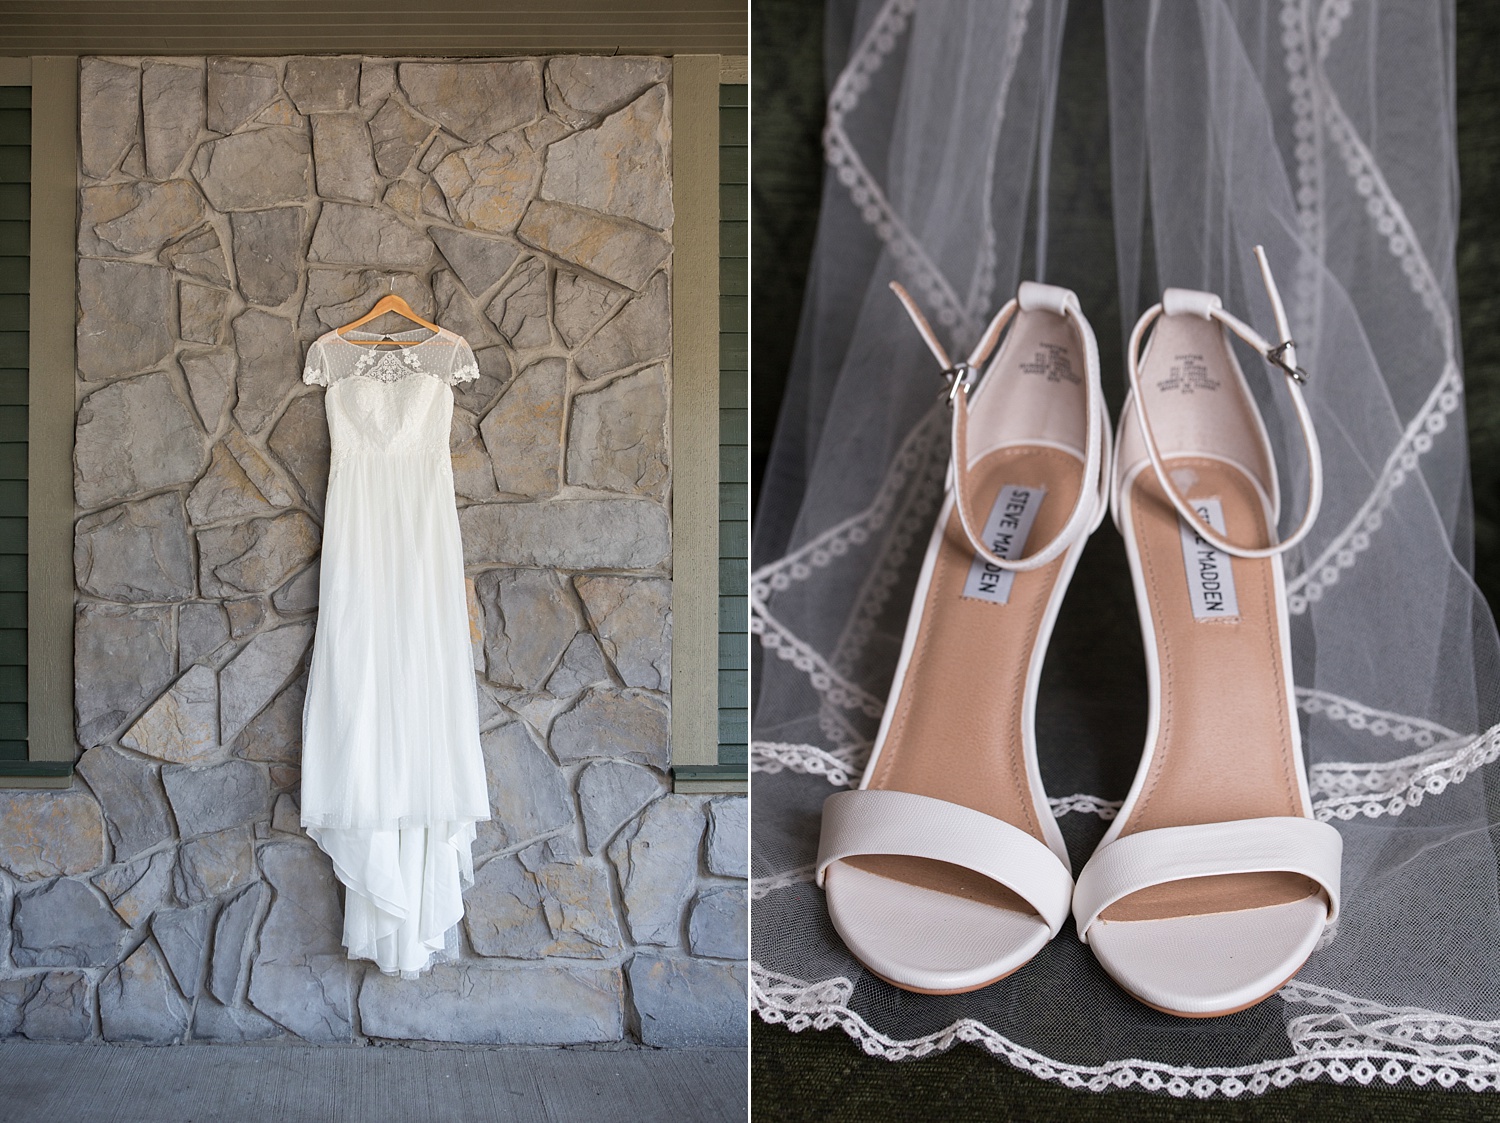 Steve Madden shoes, lace wedding dress, veil